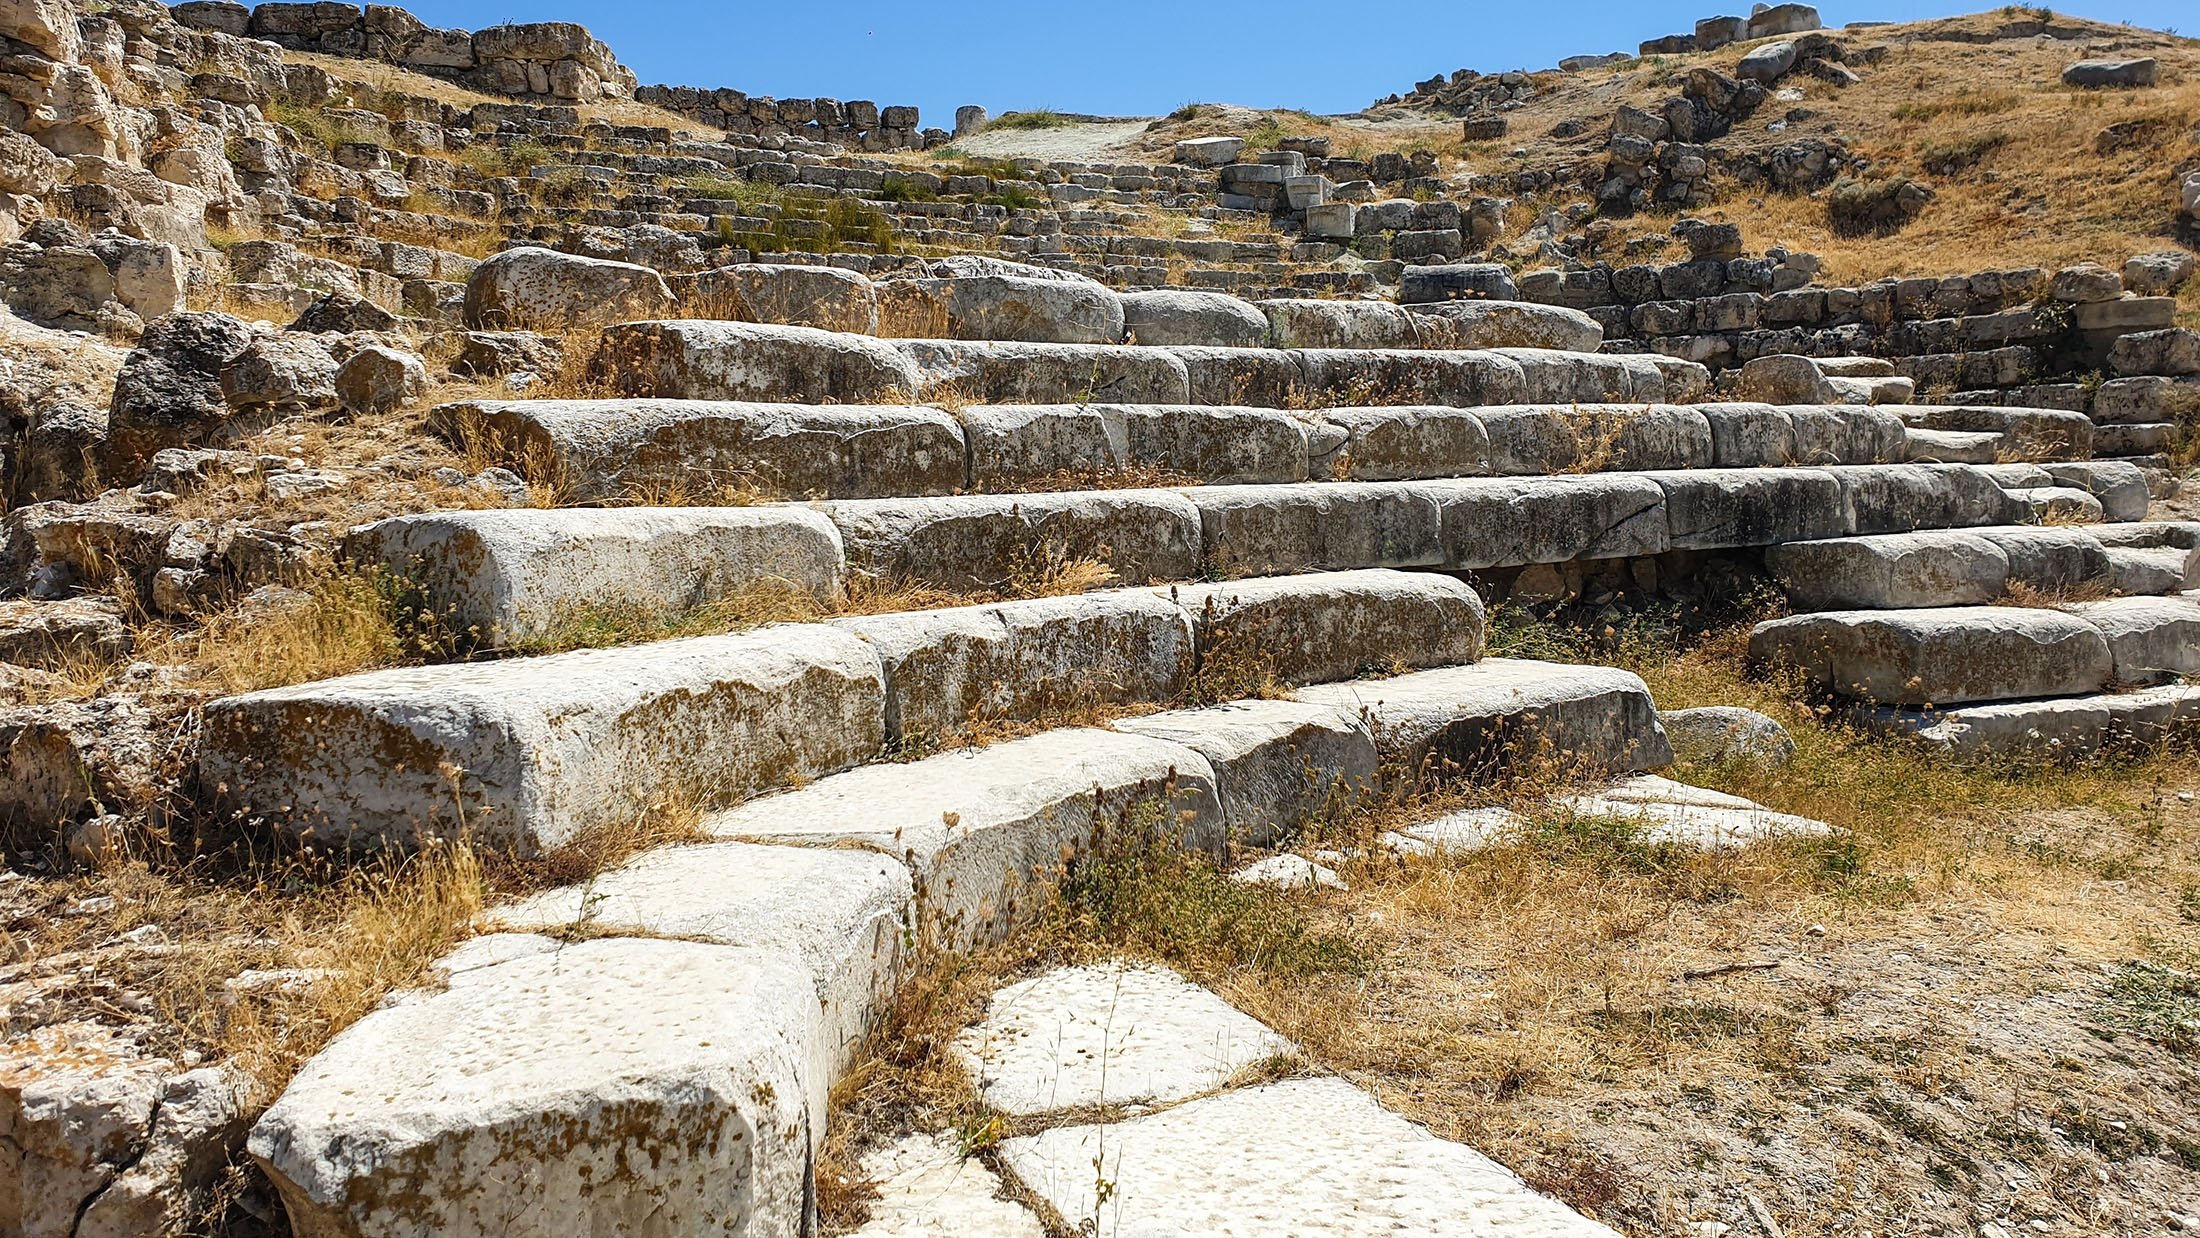 The Bouleuterion at Pessinus. (Photo by Argun Konuk)